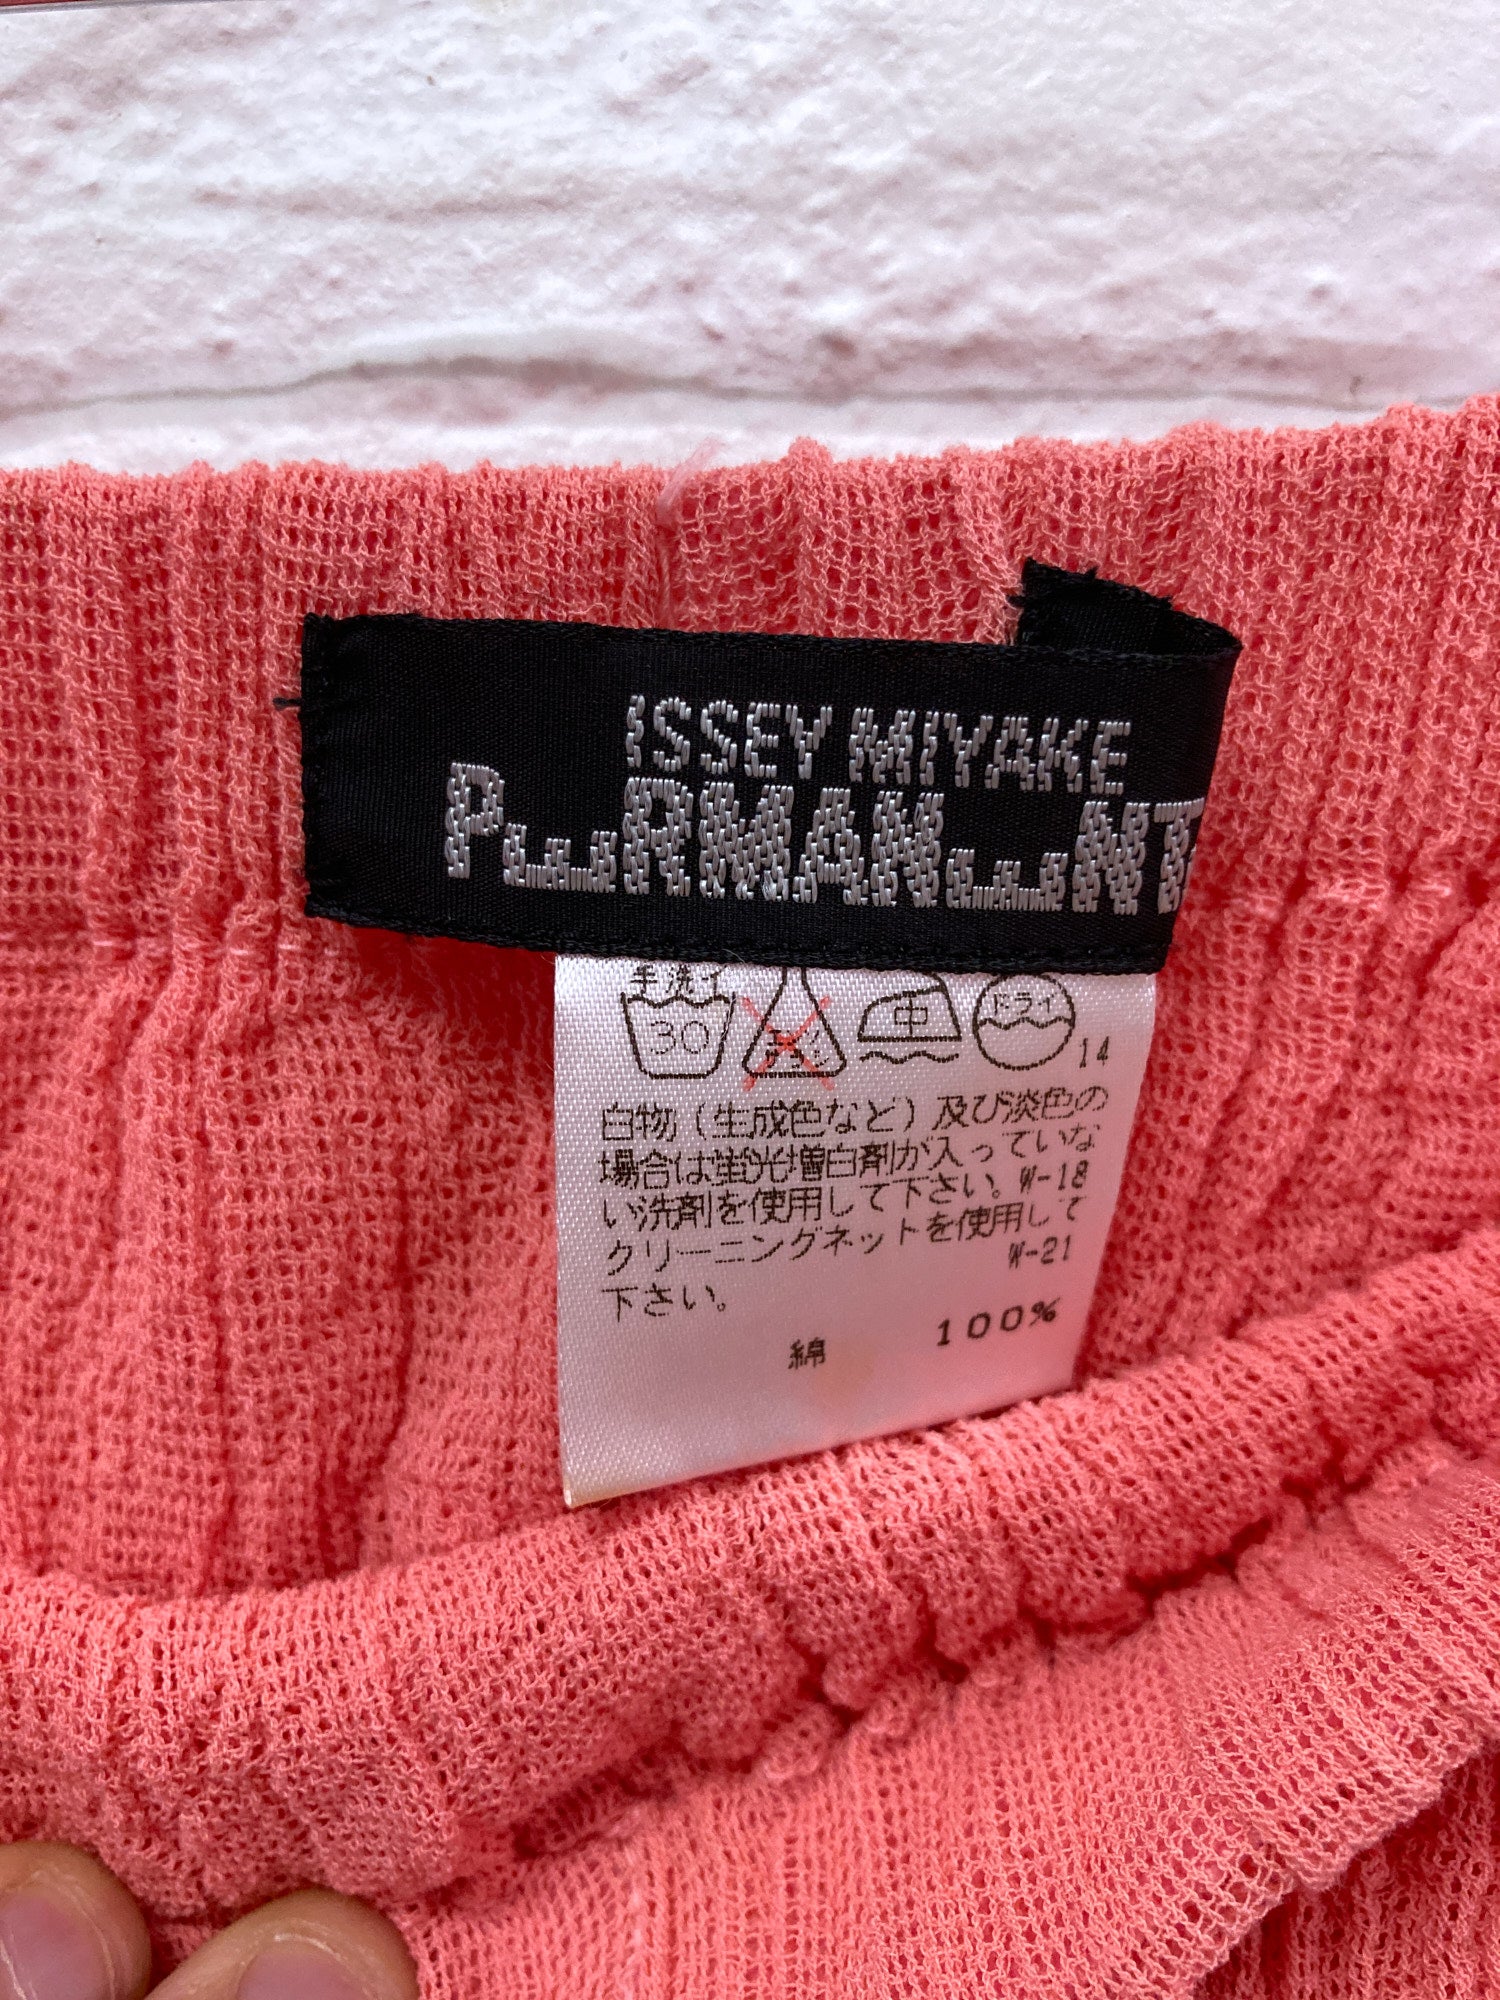 Issey Miyake Permanente creased pink cotton layered skirt or tube dress - M S